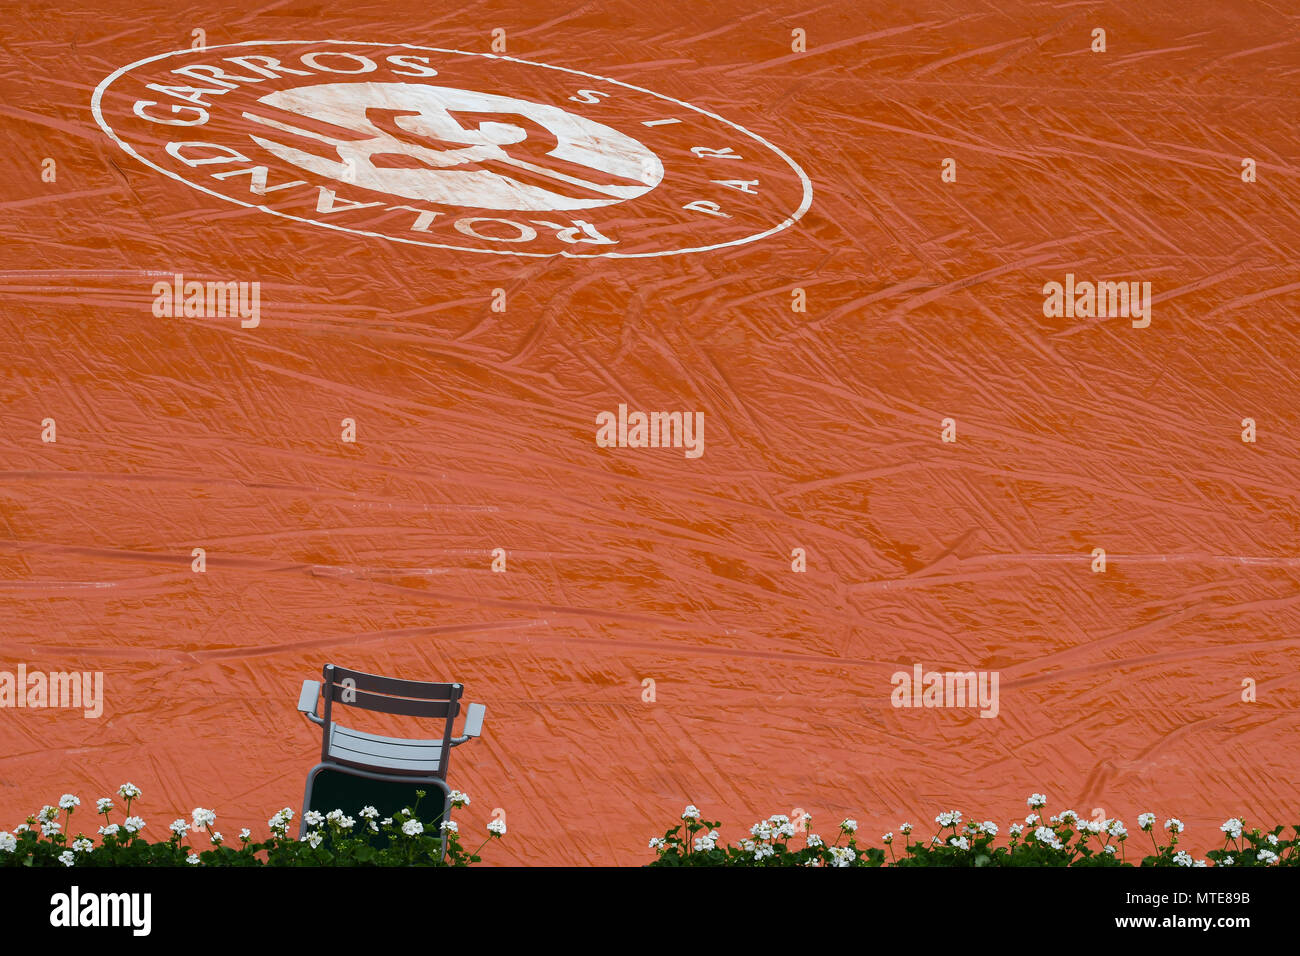 French Open 2018, Roland Garros, tennis court, rain Stock Photo